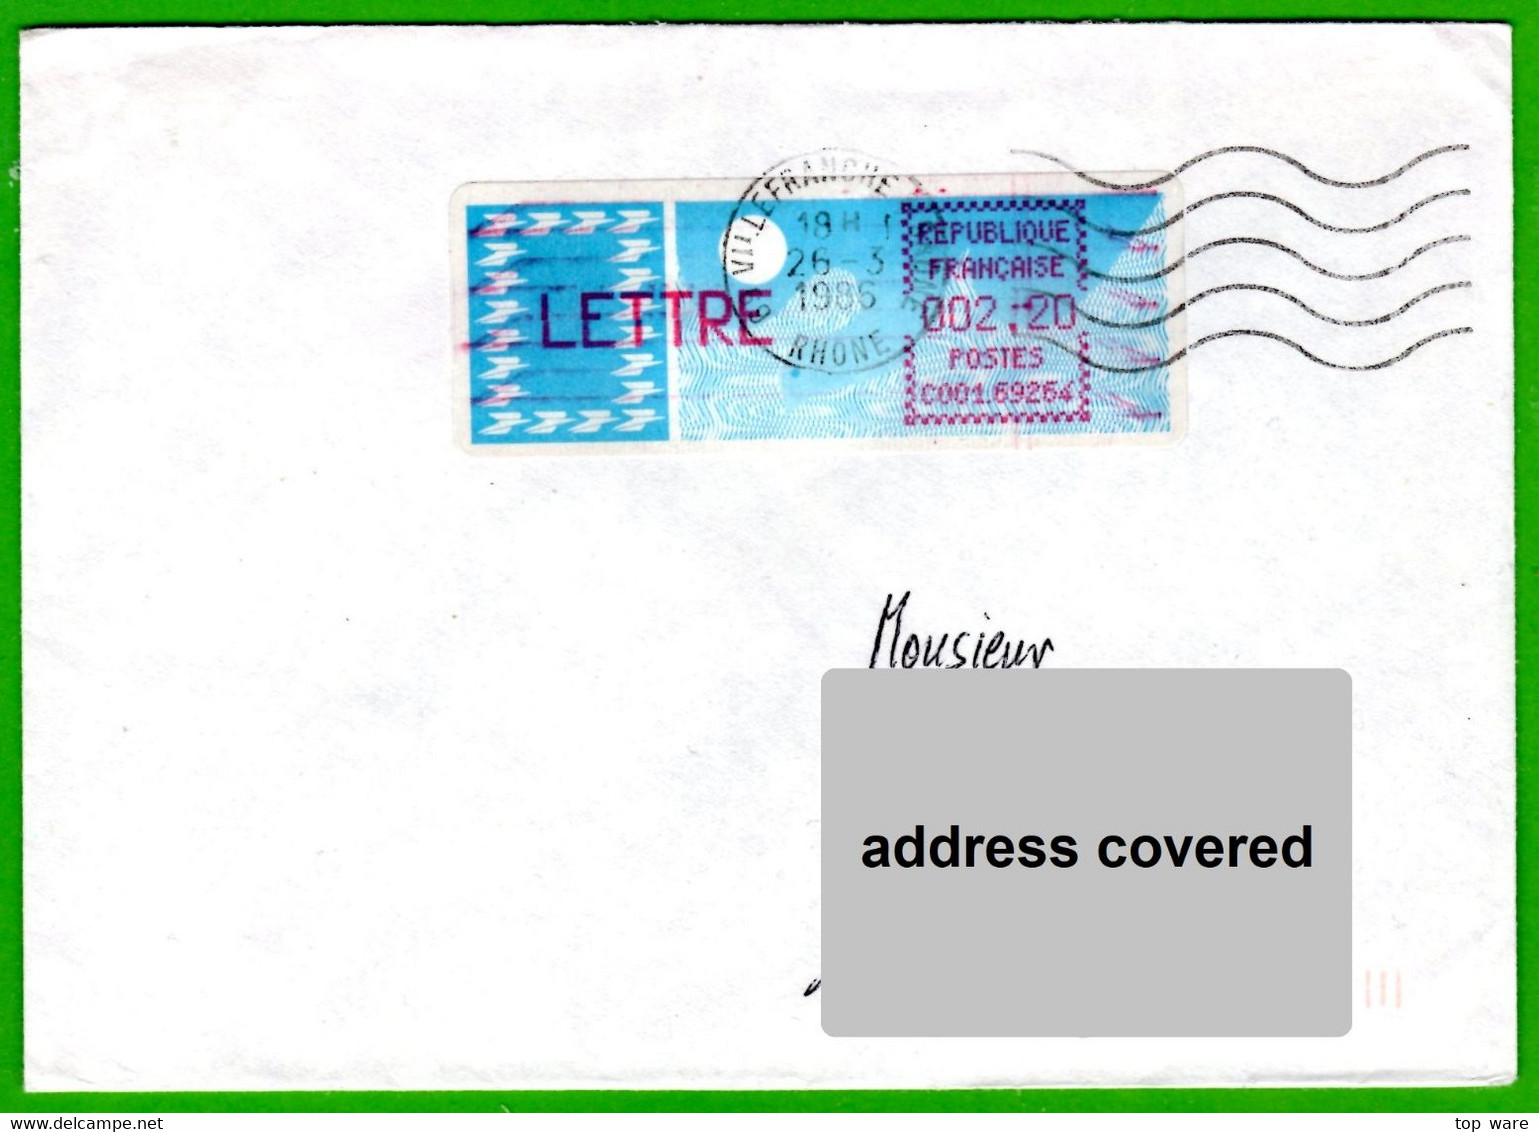 France LSA ATM Stamps C001.69264 / Michel 6.5 Zd / LETTRE 2,20 On Cover 26.3.86 Villefranche / Distributeurs - 1985 Carta « Carrier »